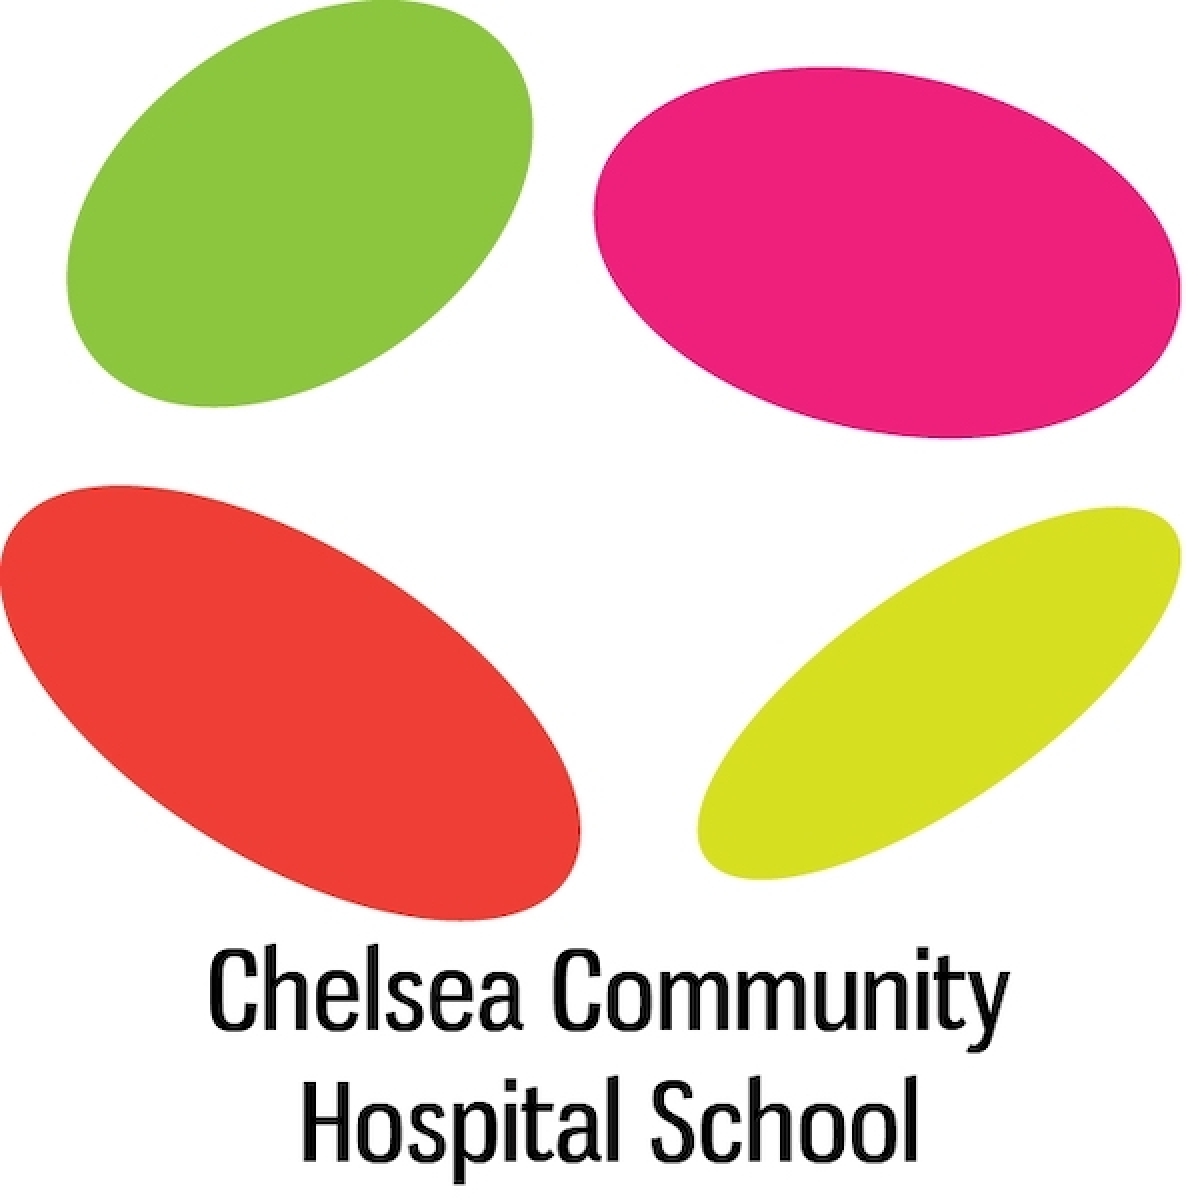 Friends of Chelsea Childrens Hospital School eCards